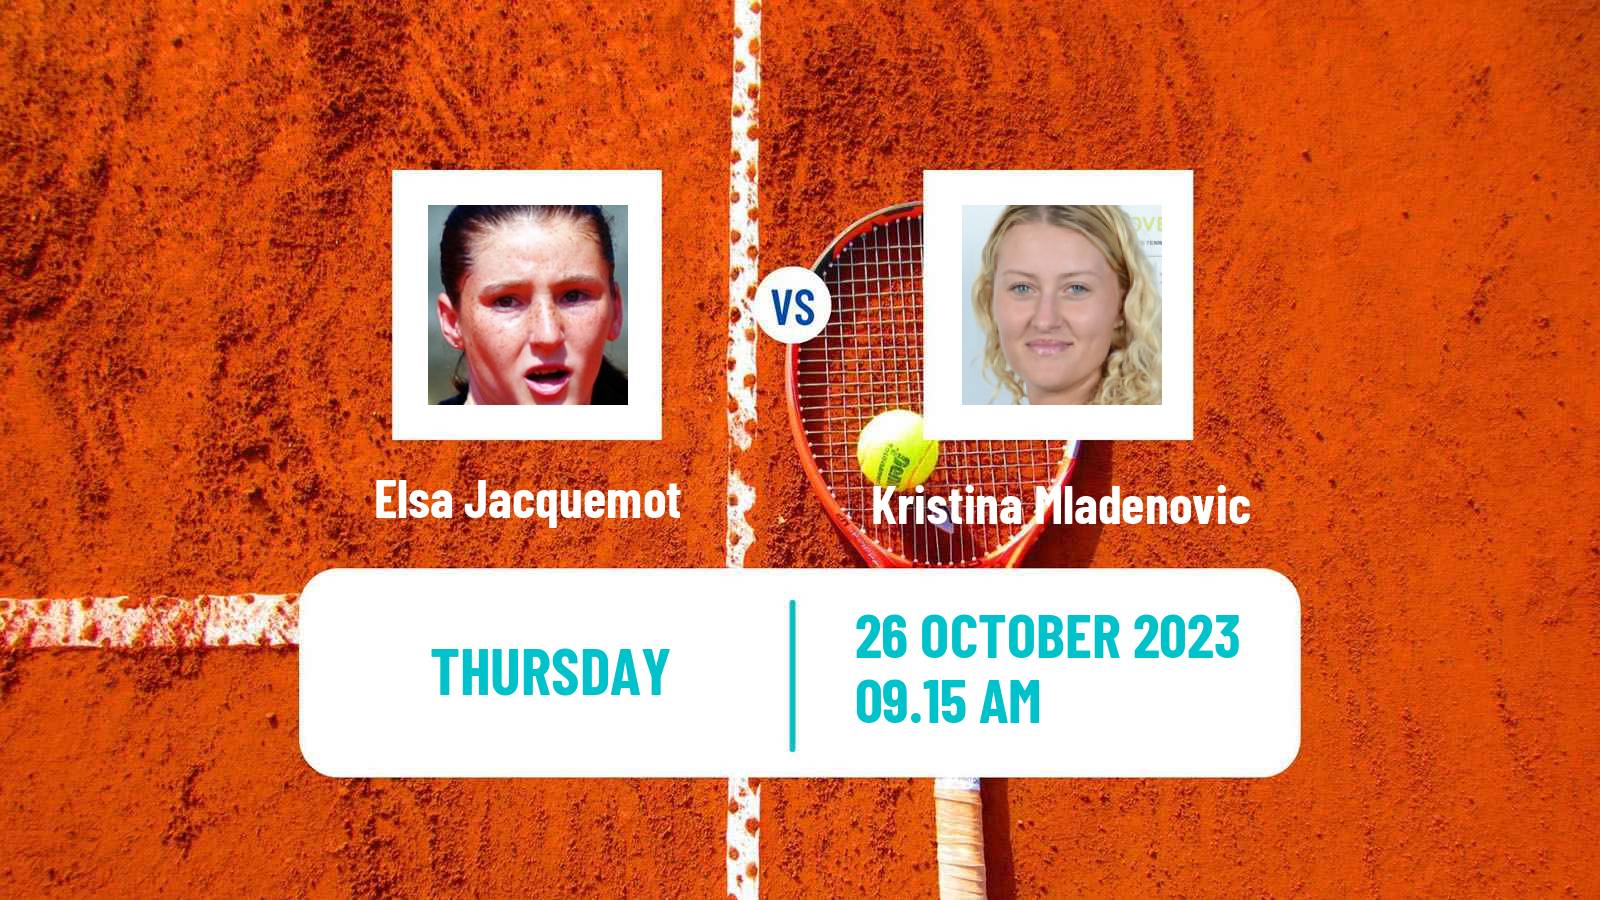 Tennis ITF W80 Poitiers Women Elsa Jacquemot - Kristina Mladenovic